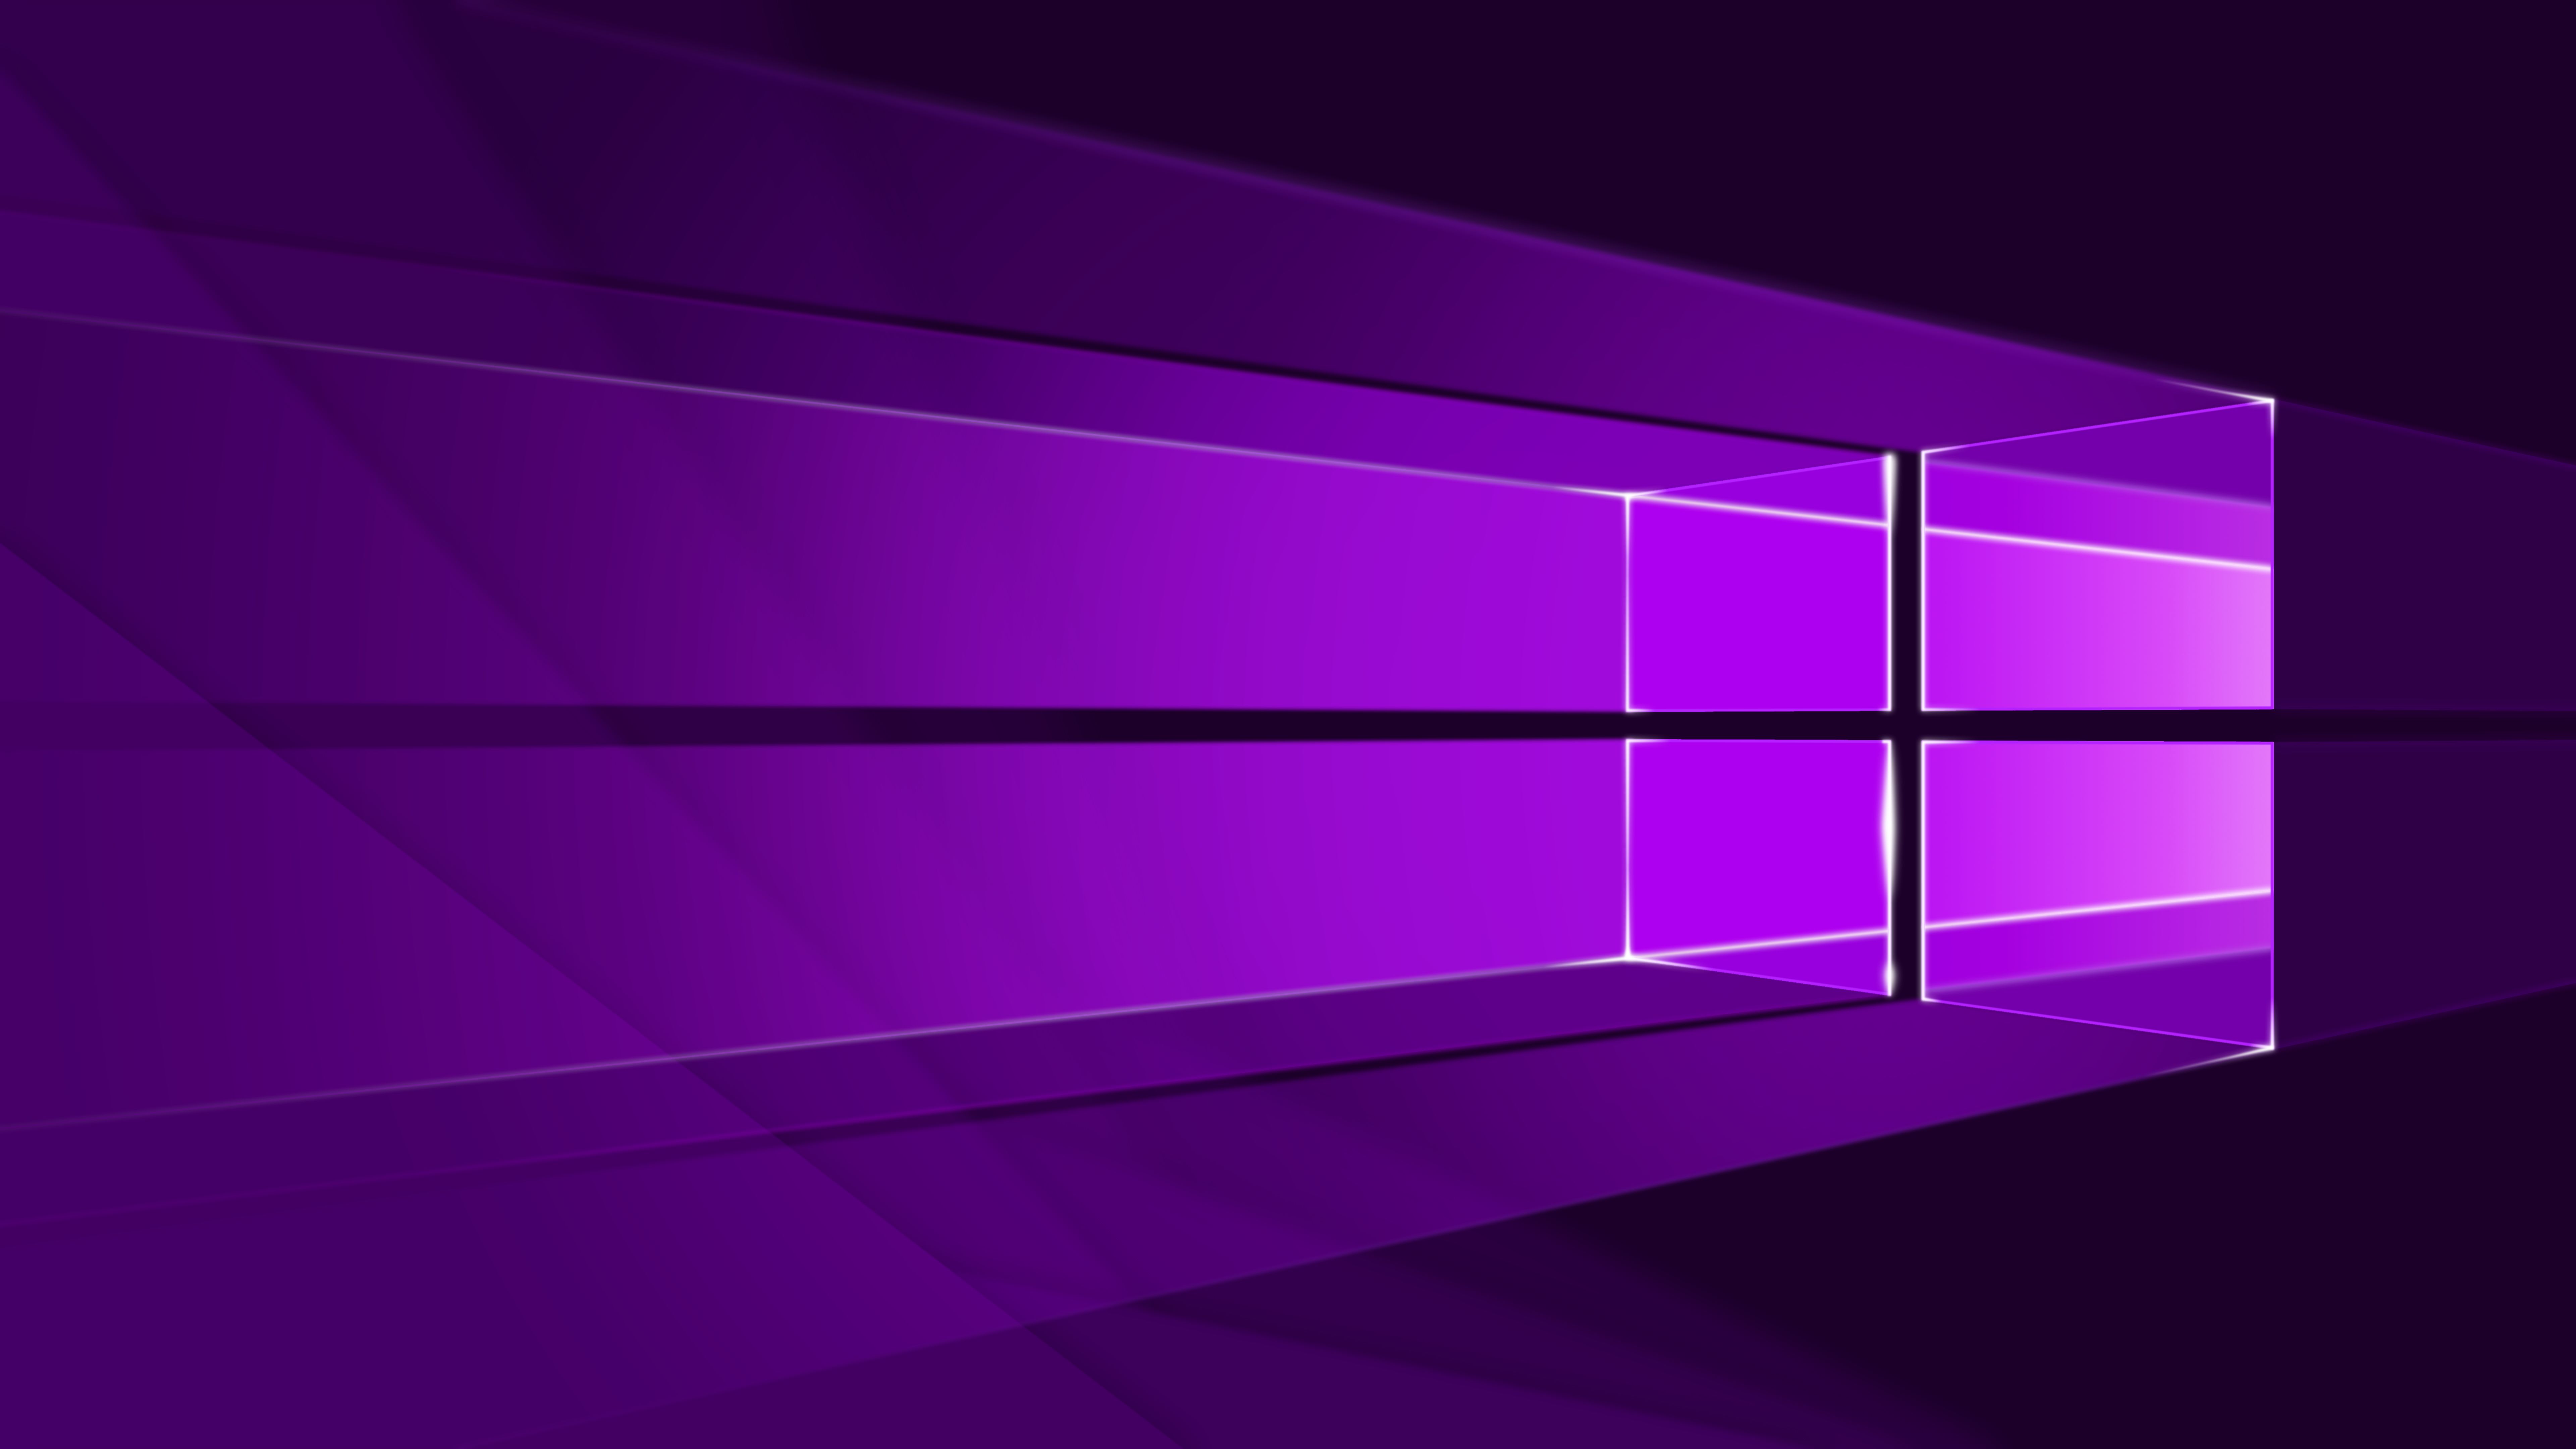 Windows 10 Wallpaper for desktop devices